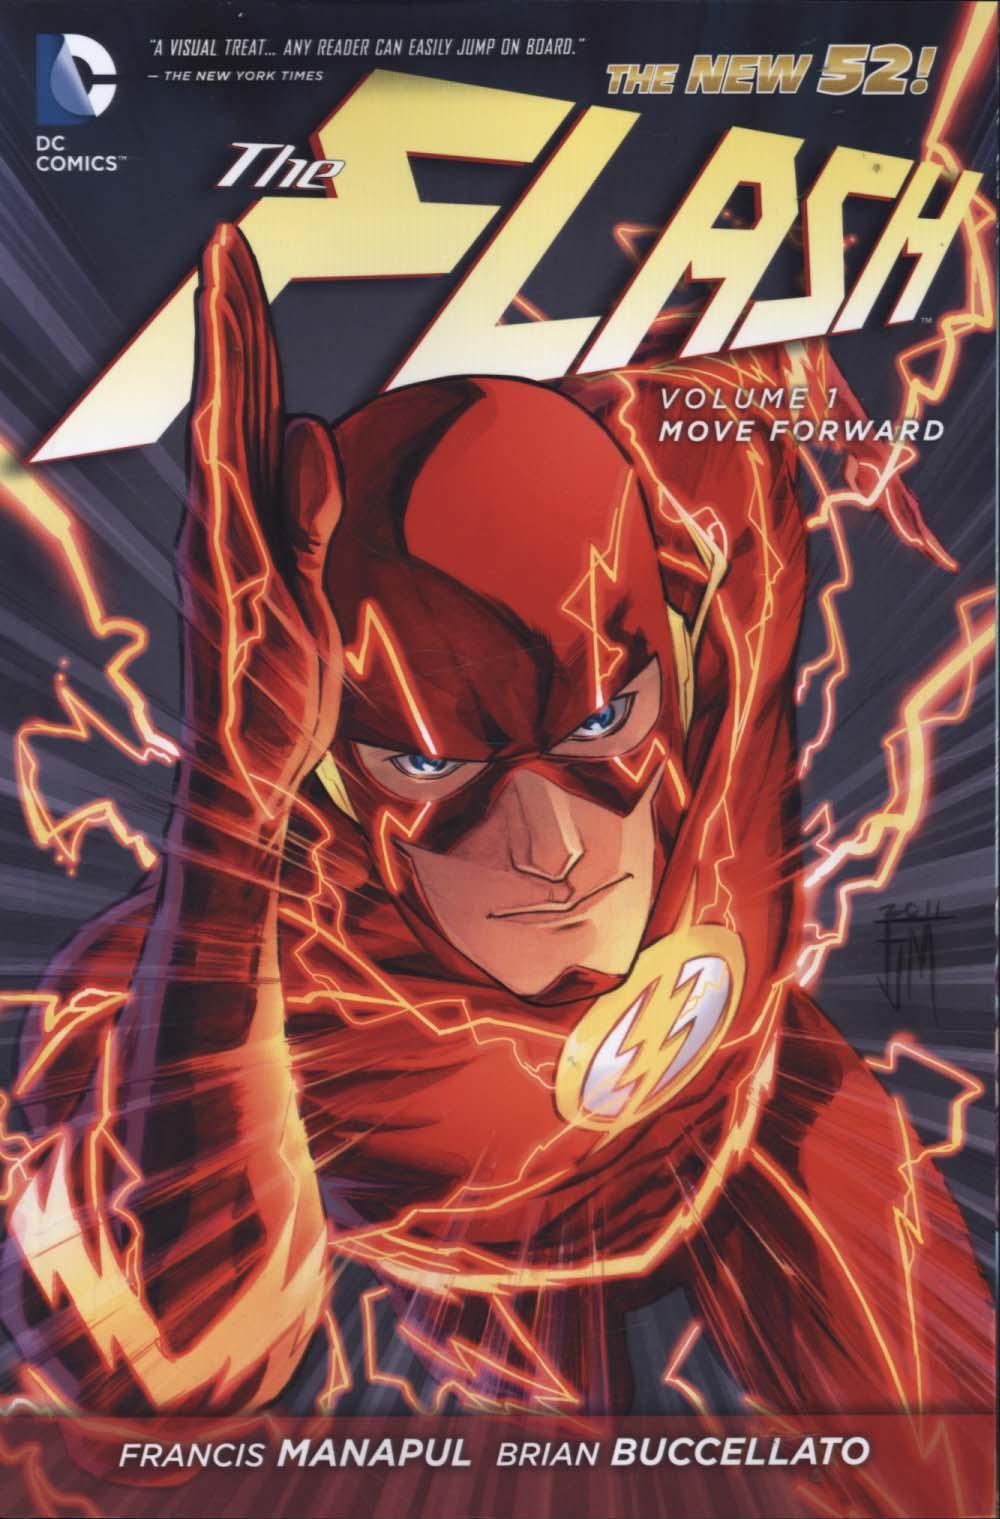 Flash Vol. 1 Move Forward (The New 52)